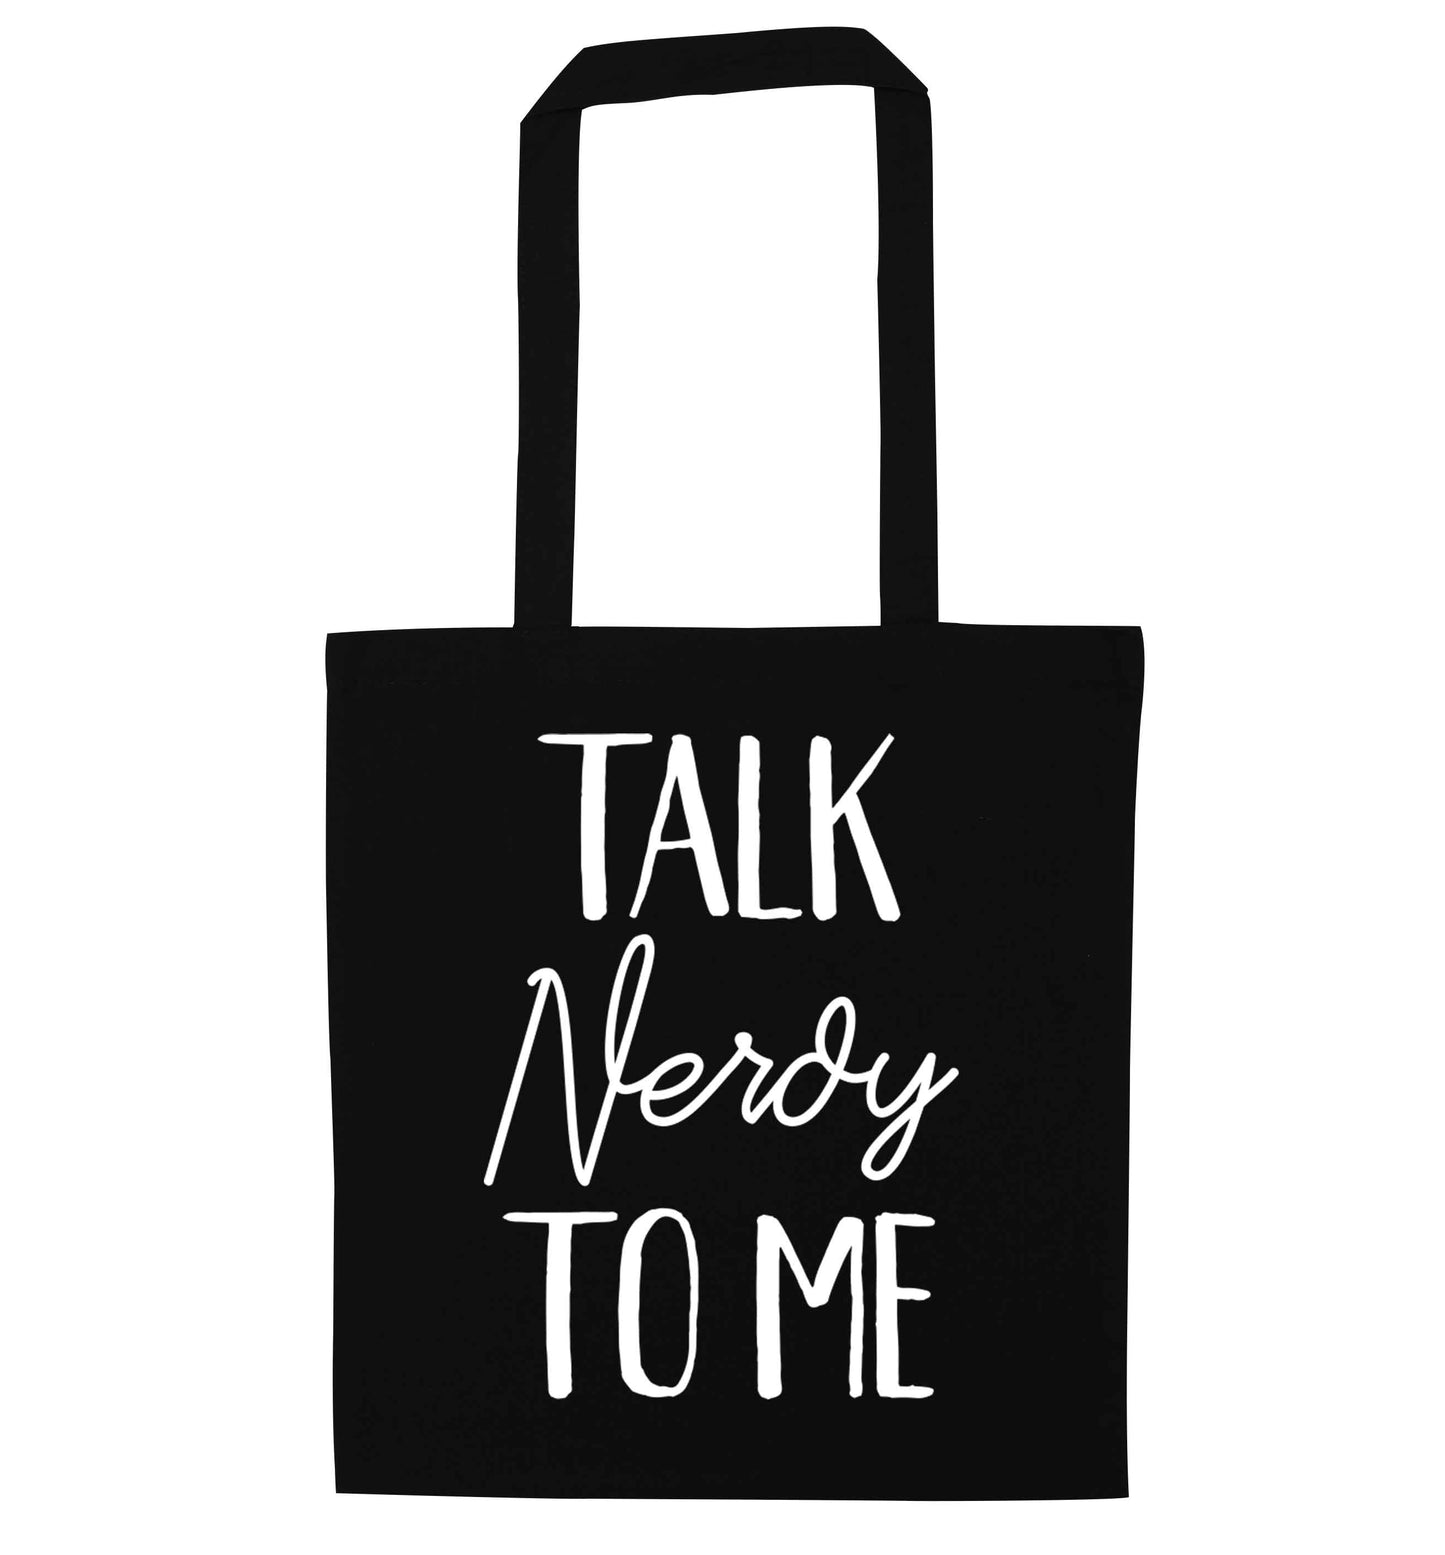 Talk nerdy to me black tote bag